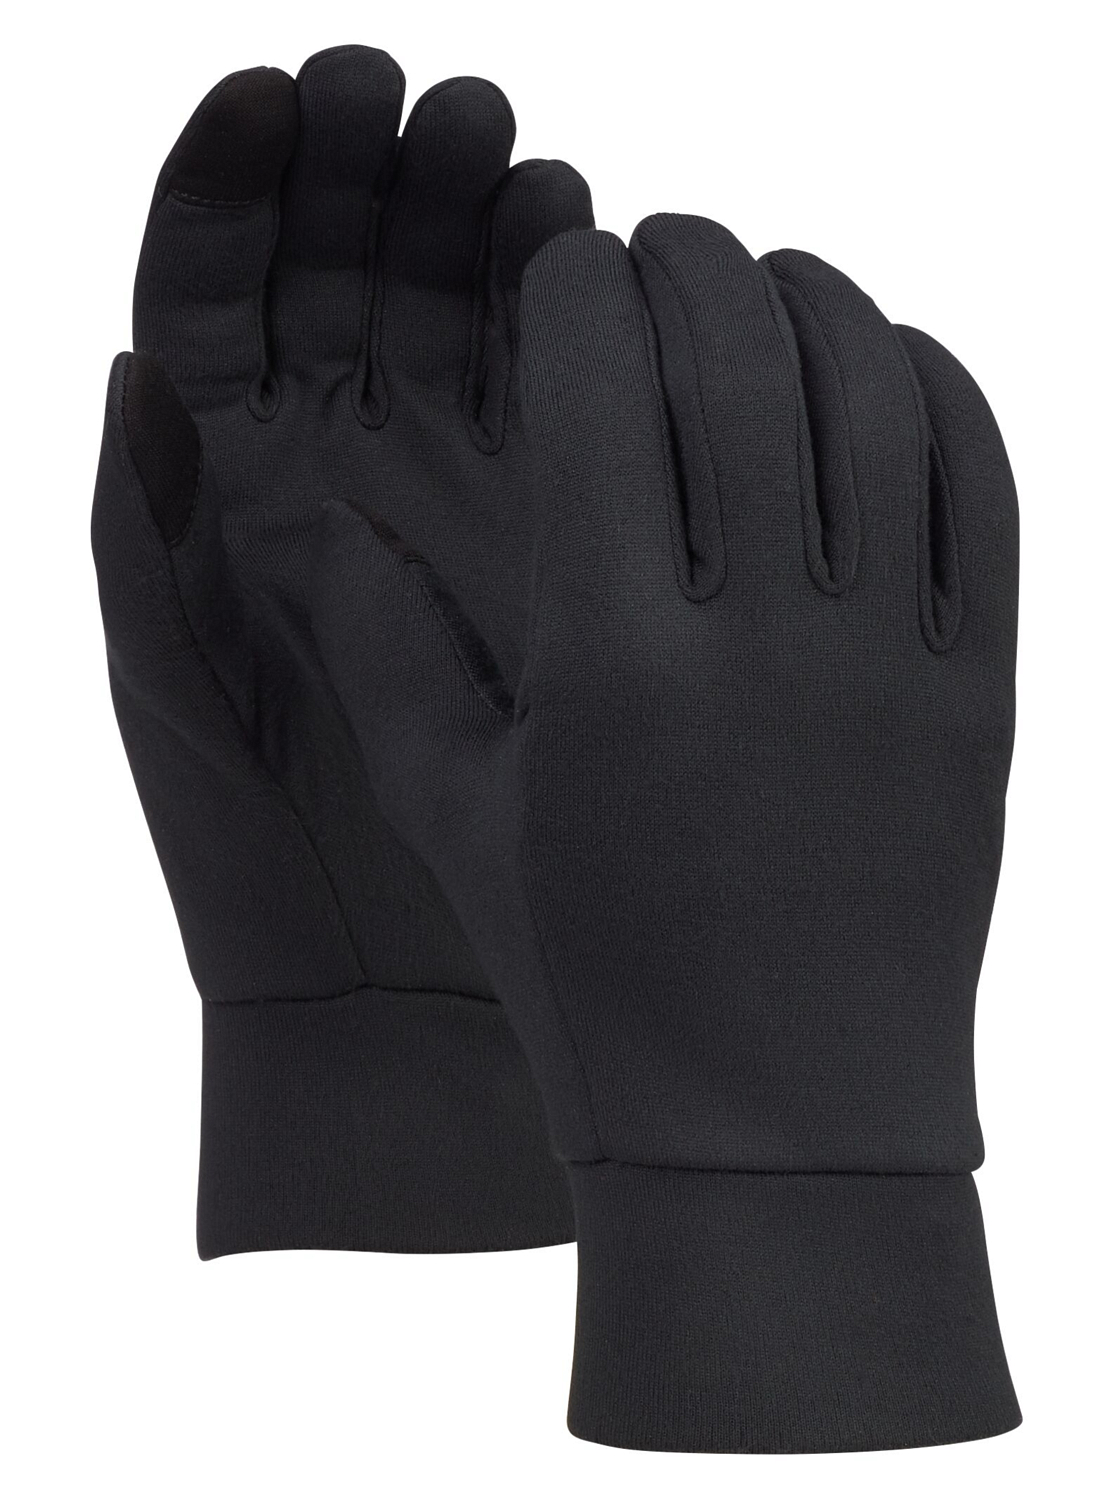 Перчатки горнолыжные BURTON 2020-21 Gore-Tex Glove Black Dailola Shibori